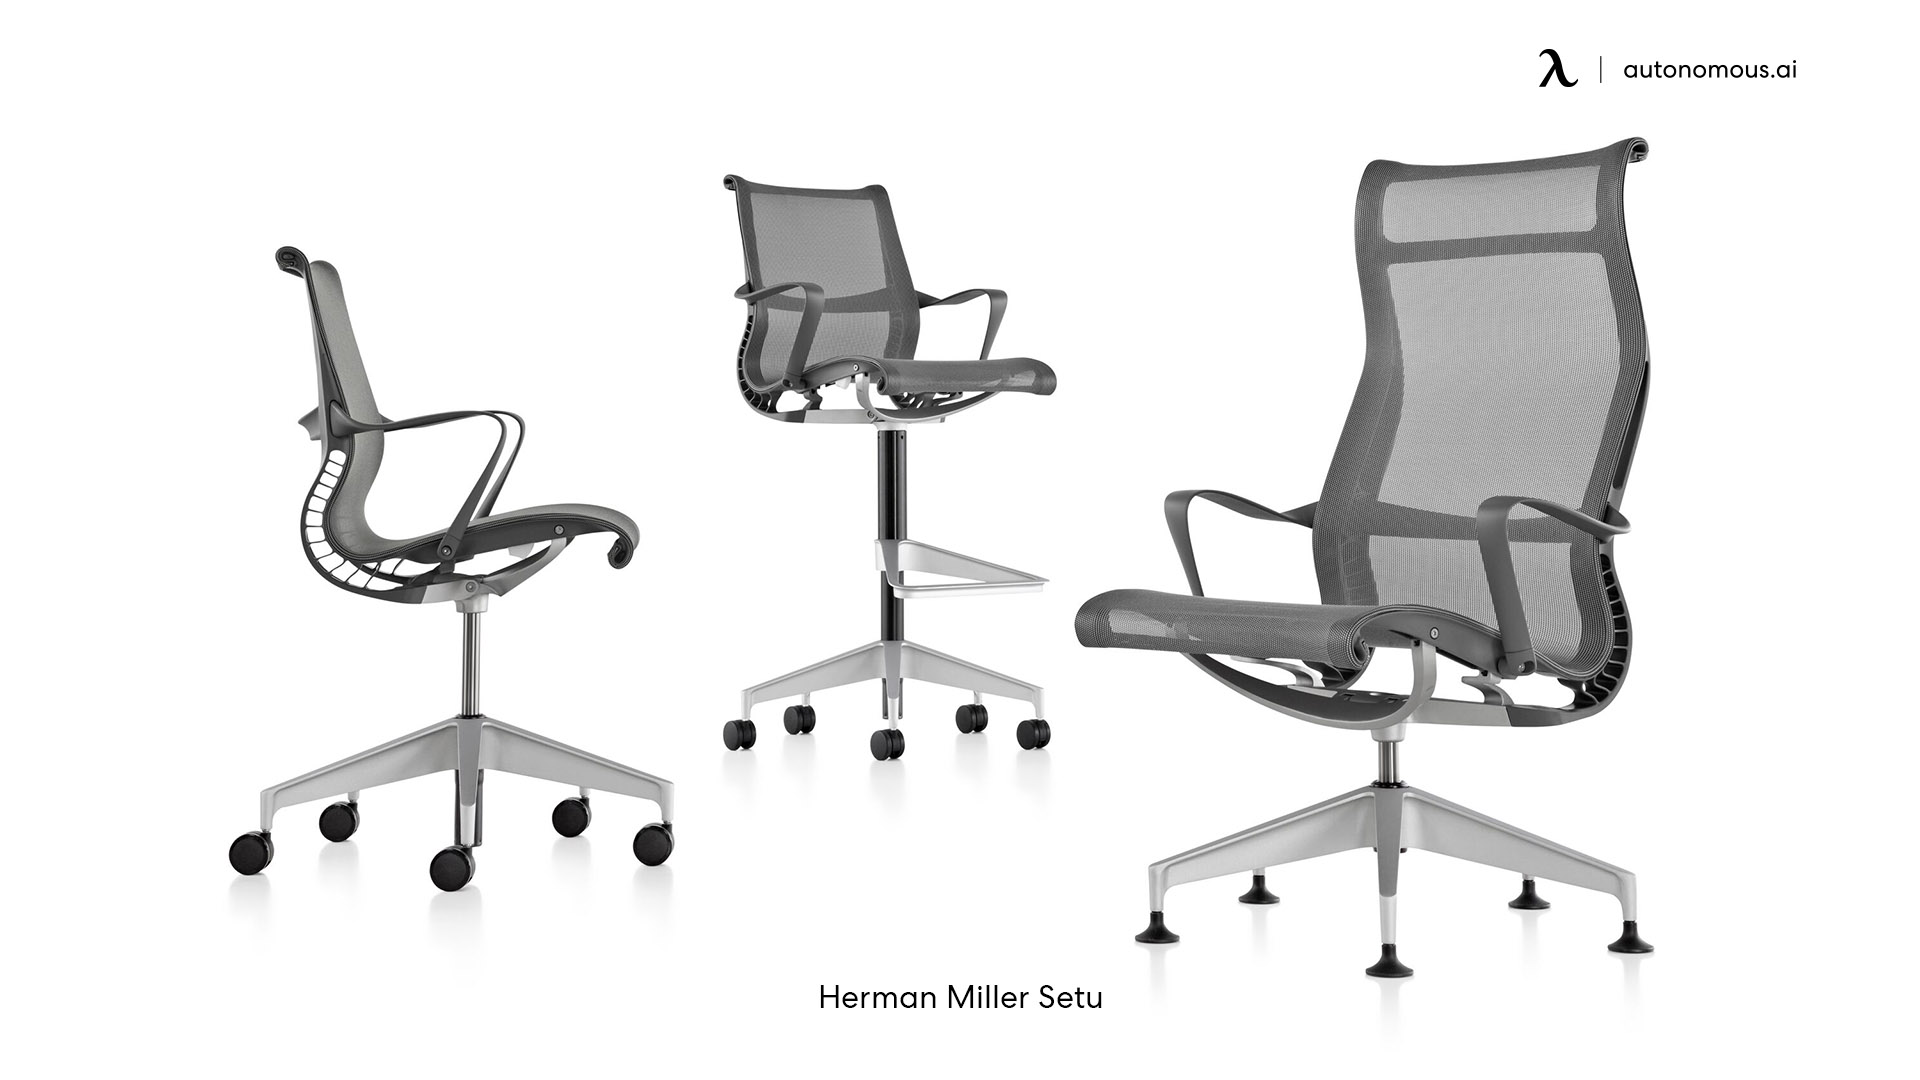 Herman Miller Setu grey desk chair with arms